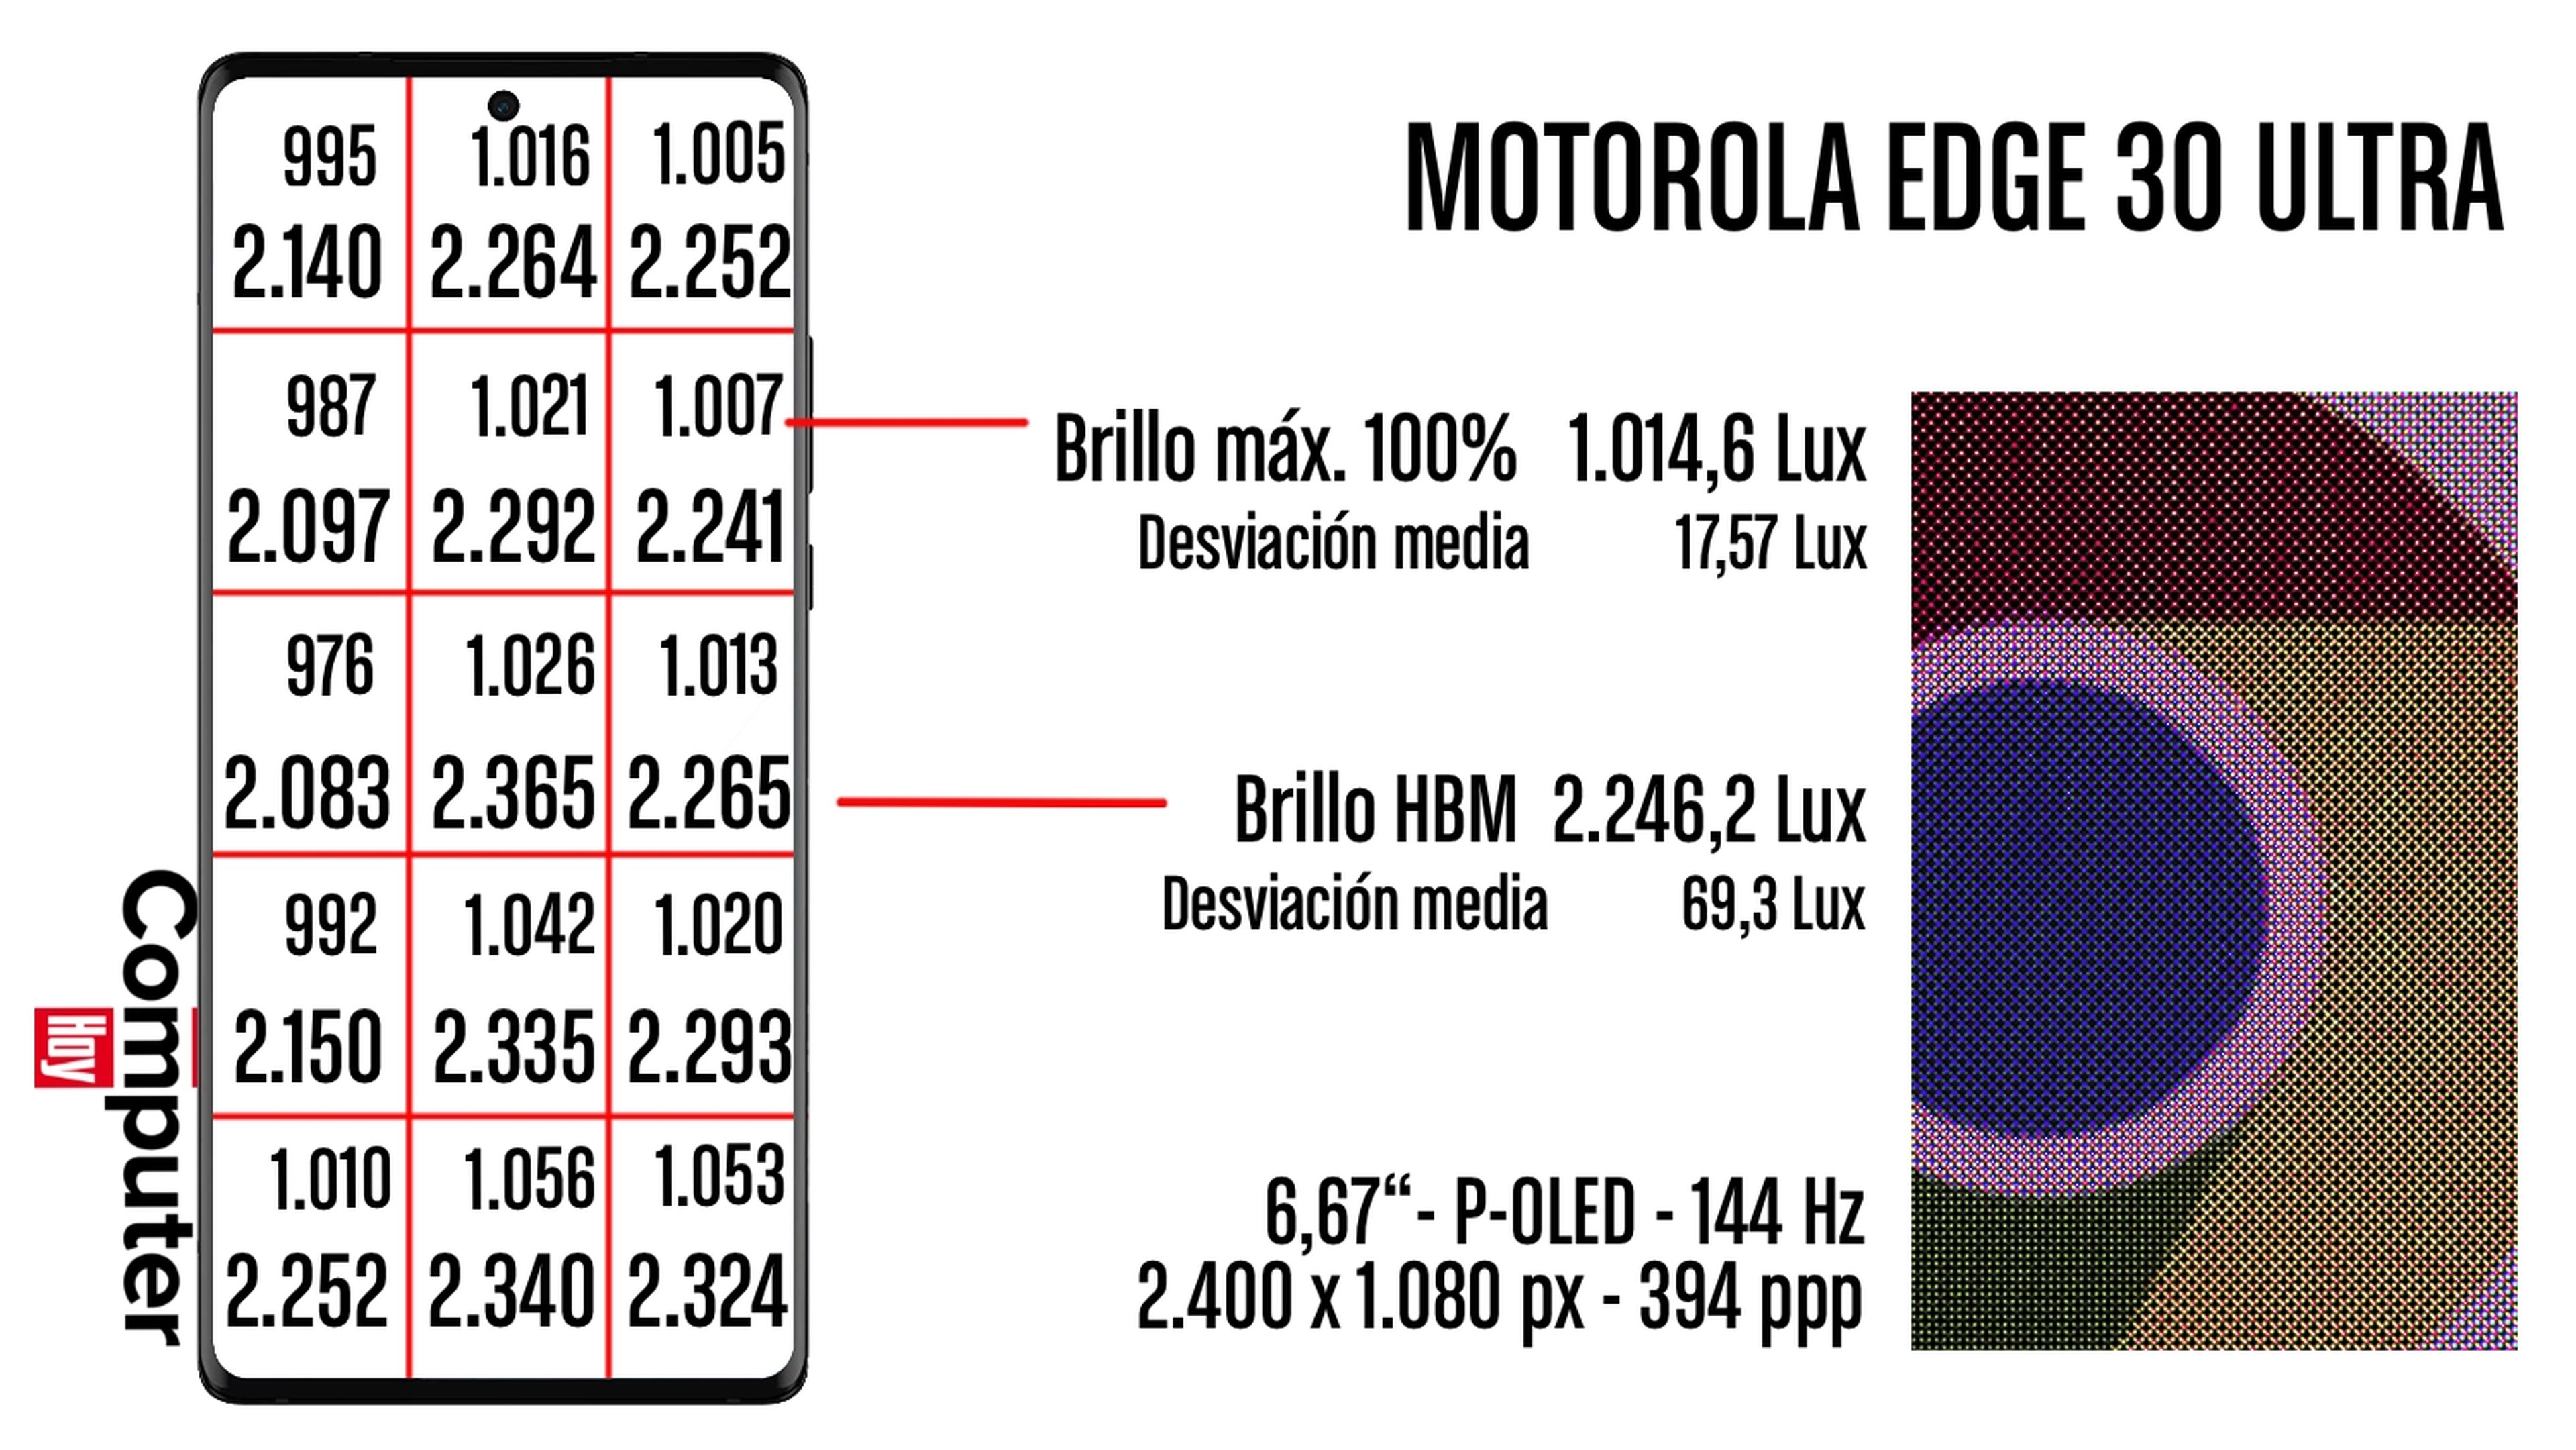 Brillo de pantalla del Motorola Edge 30 Ultra